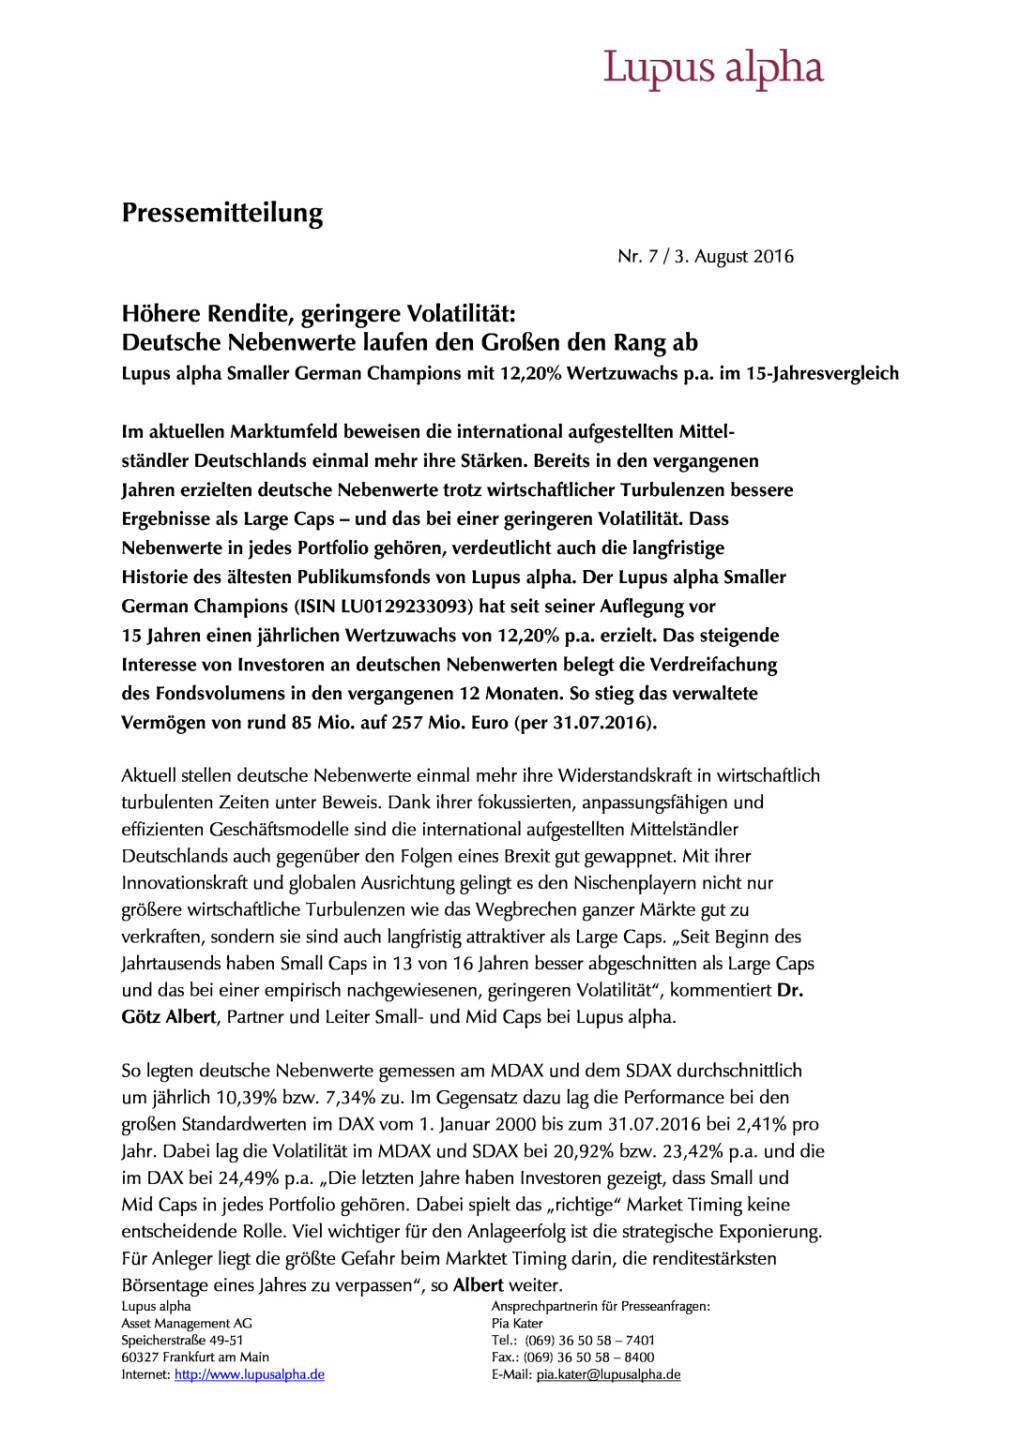 Lupus alpha: Deutsche Nebenwerte laufen den Großen den Rang ab, Seite 1/2, komplettes Dokument unter http://boerse-social.com/static/uploads/file_1561_lupus_alpha_deutsche_nebenwerte_laufen_den_grossen_den_rang_ab.pdf